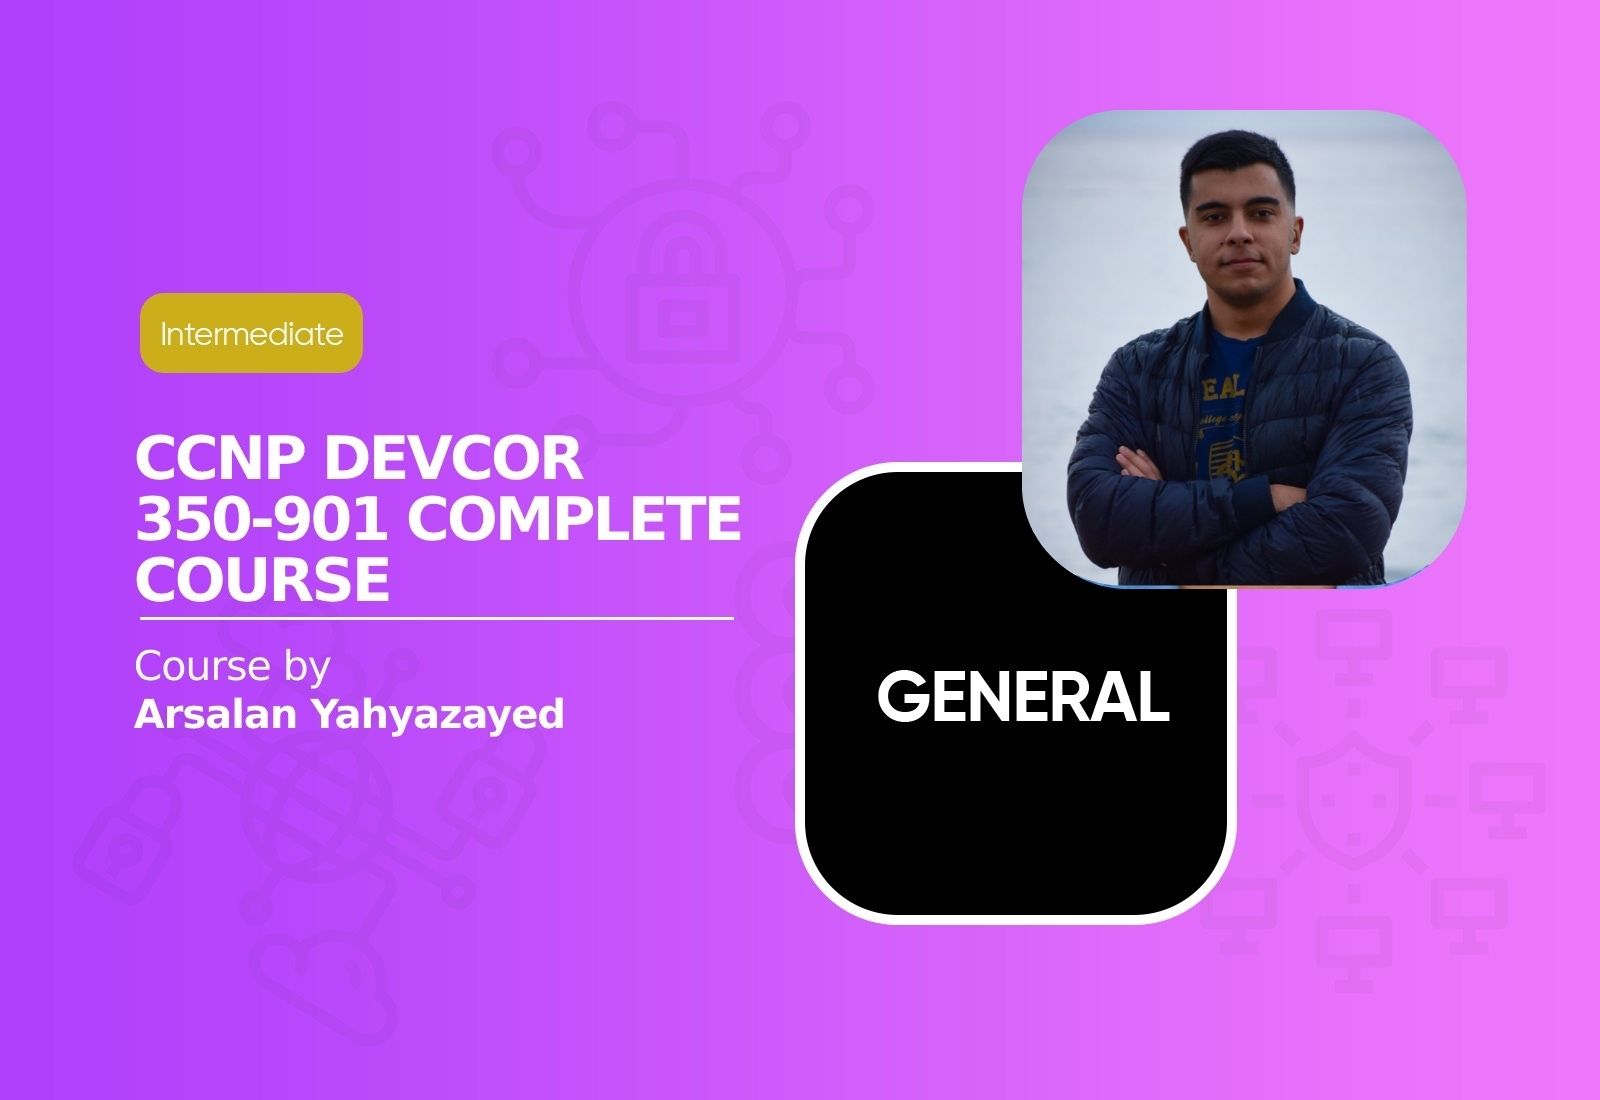 CCNP DEVCOR 350-901 Complete Course